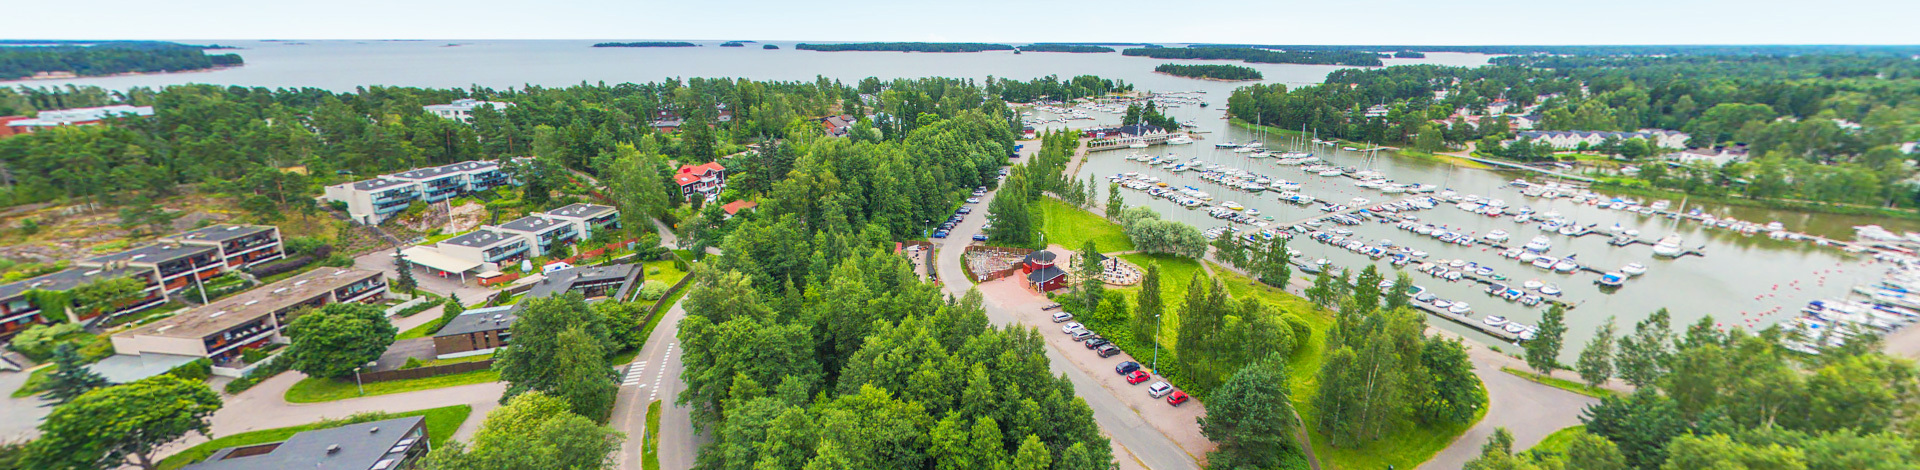 View of Haukilahti, Espoo